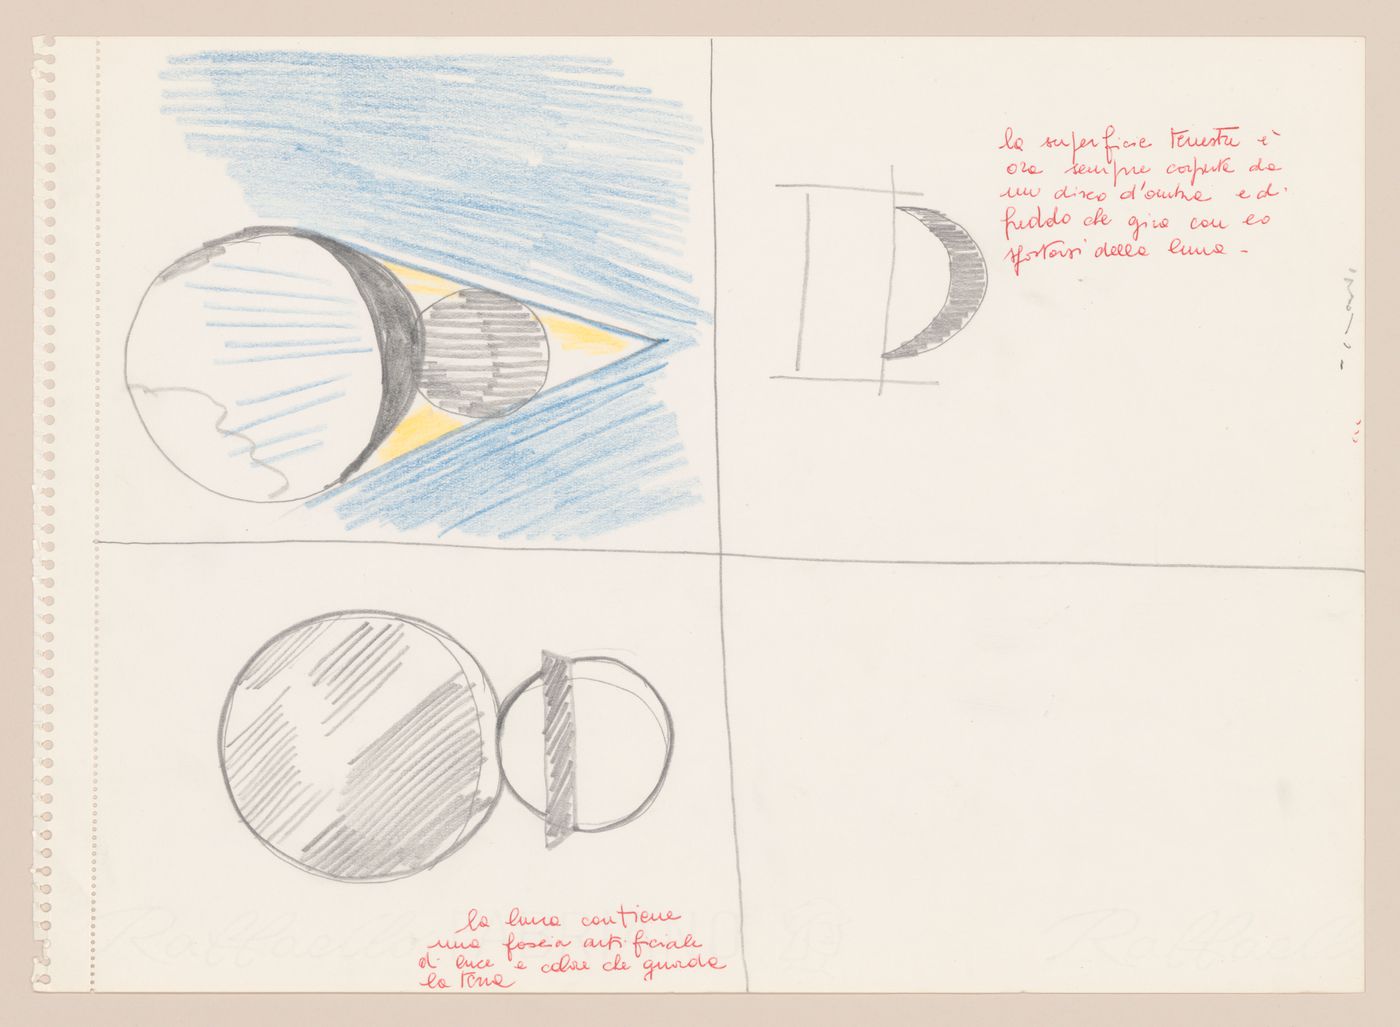 Sketches for Architettura Interplanetaria [Interplanetary Architecture]